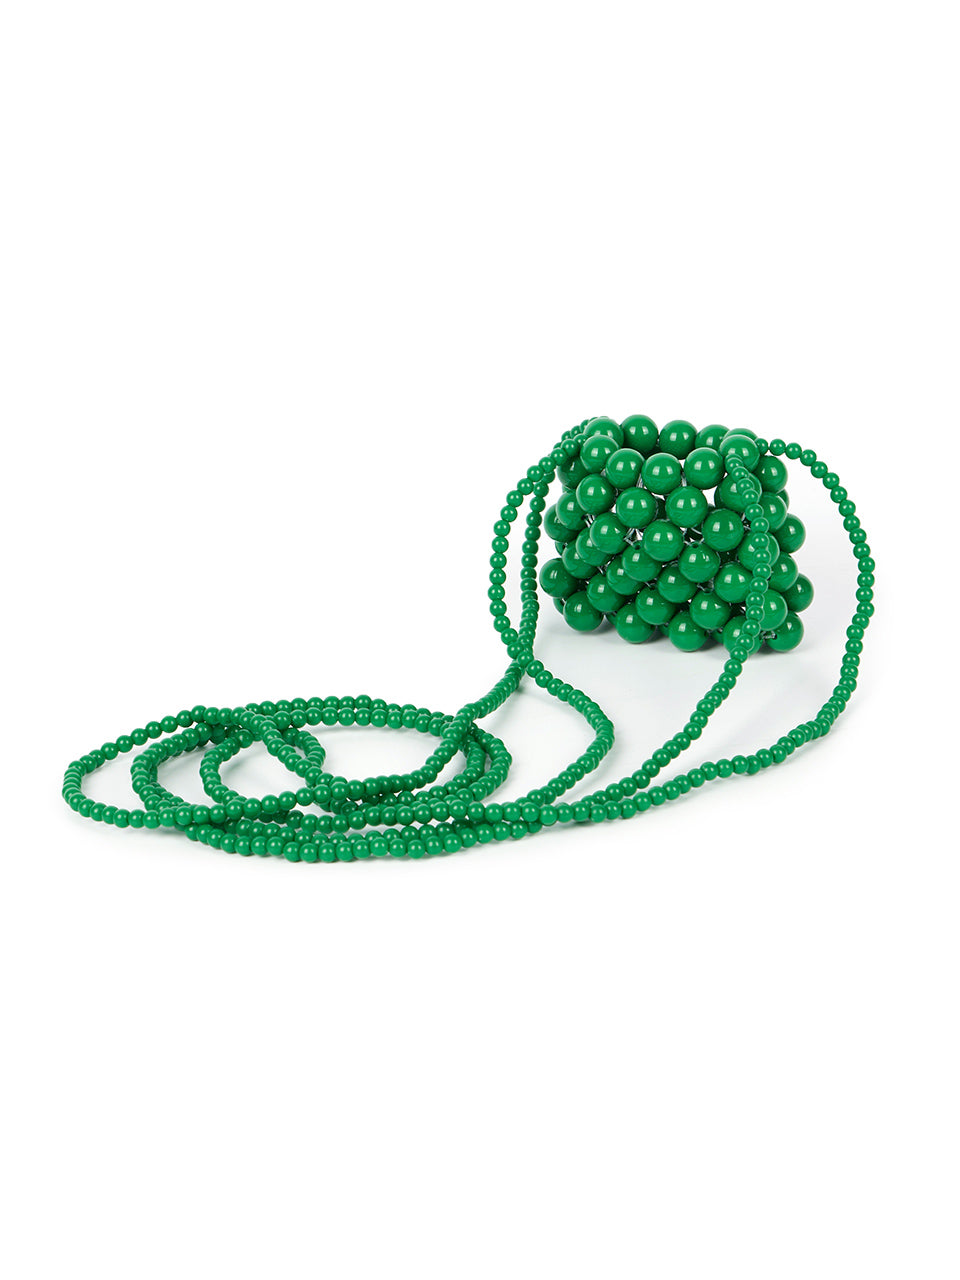 A-1556 Beads Mini Cross Bag